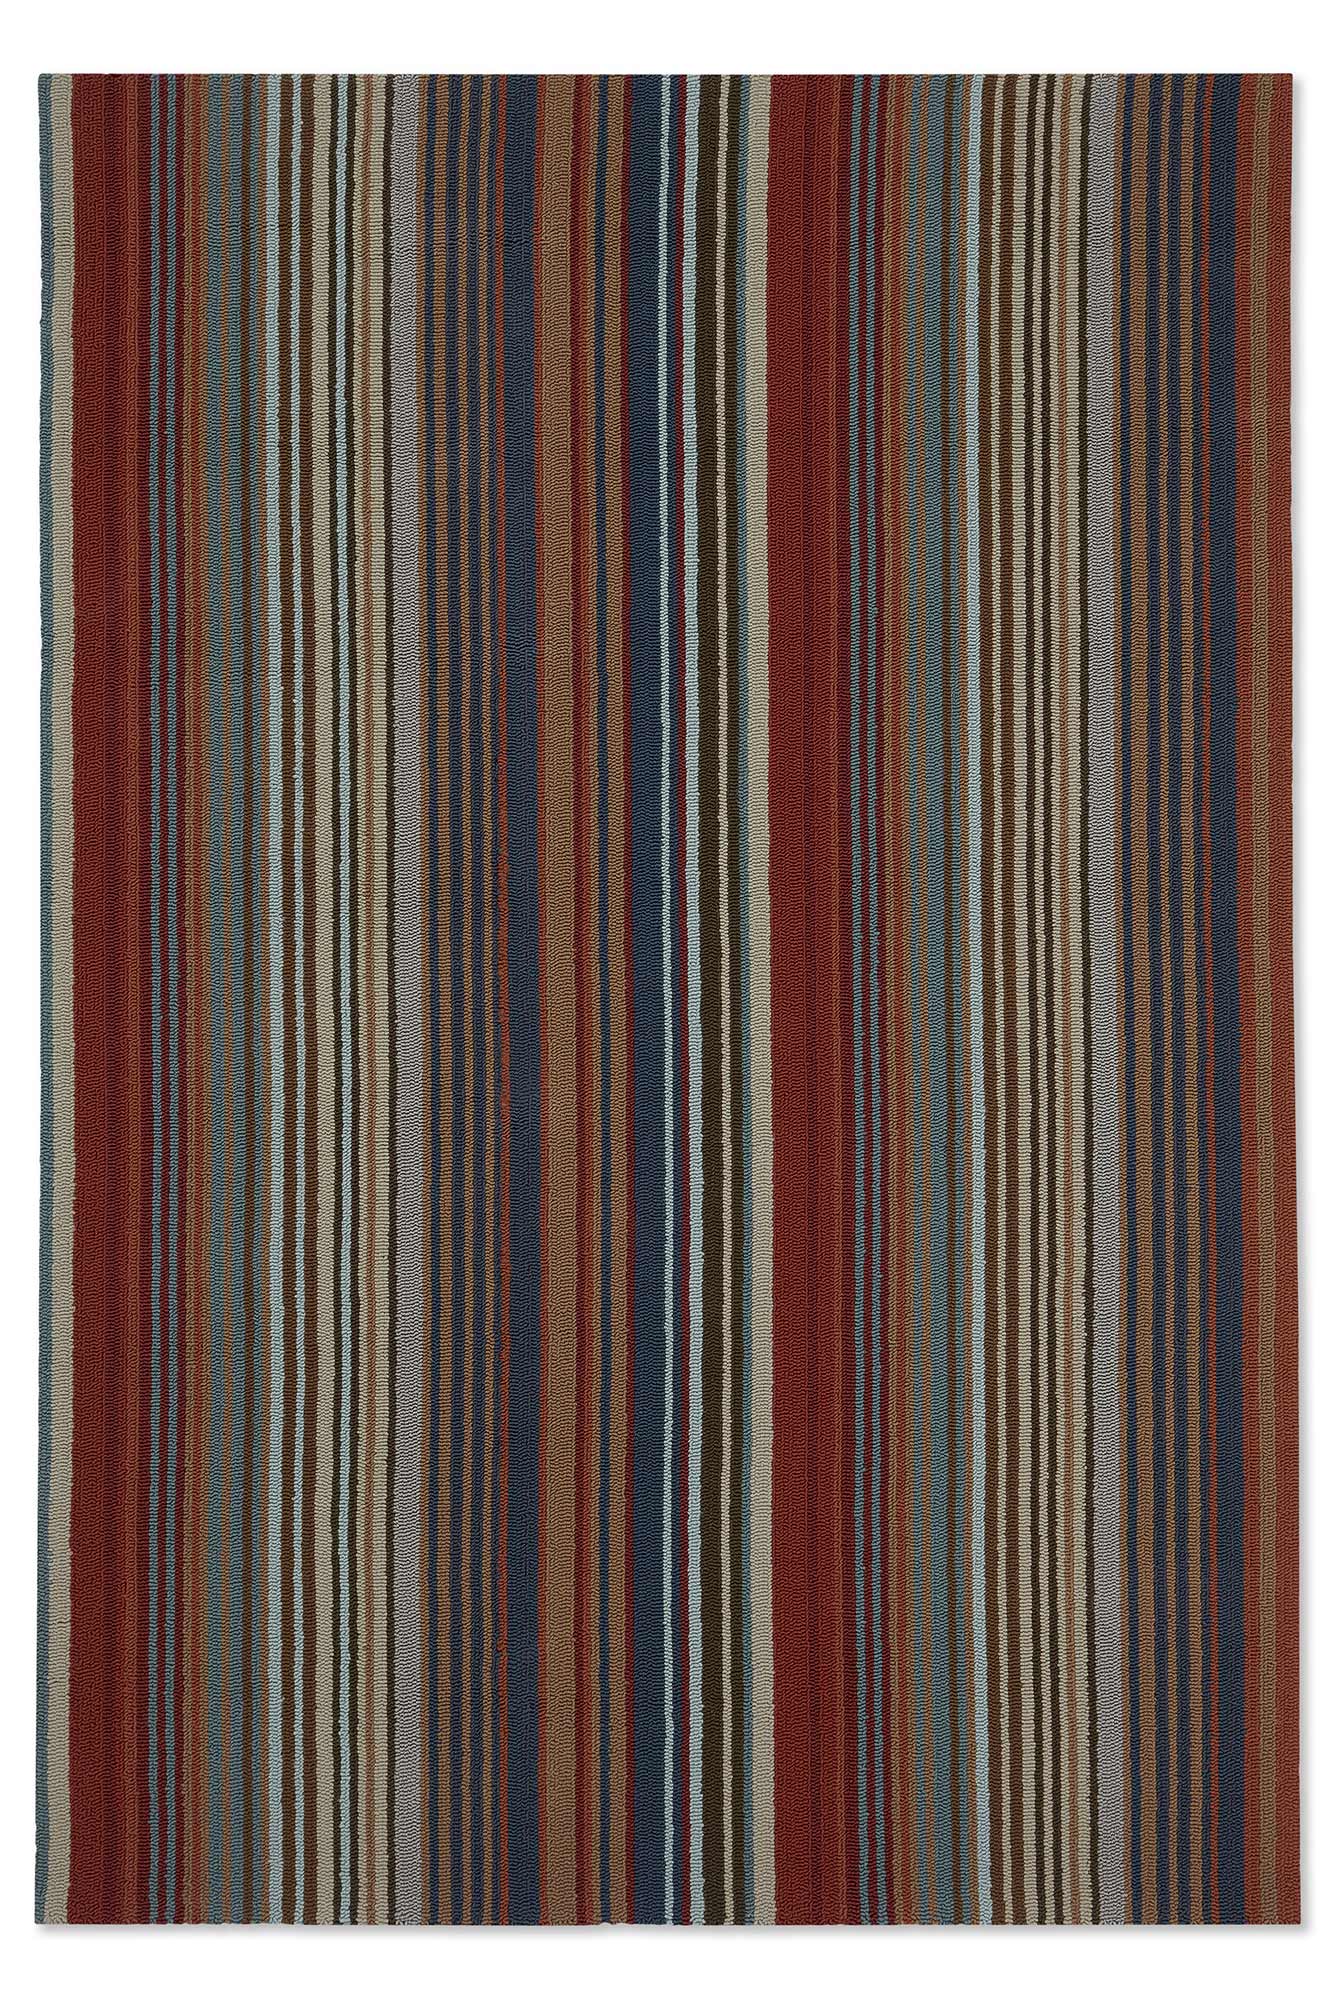 HAR-O-spectro-stripes-teal-sedonia-rust-442103-A